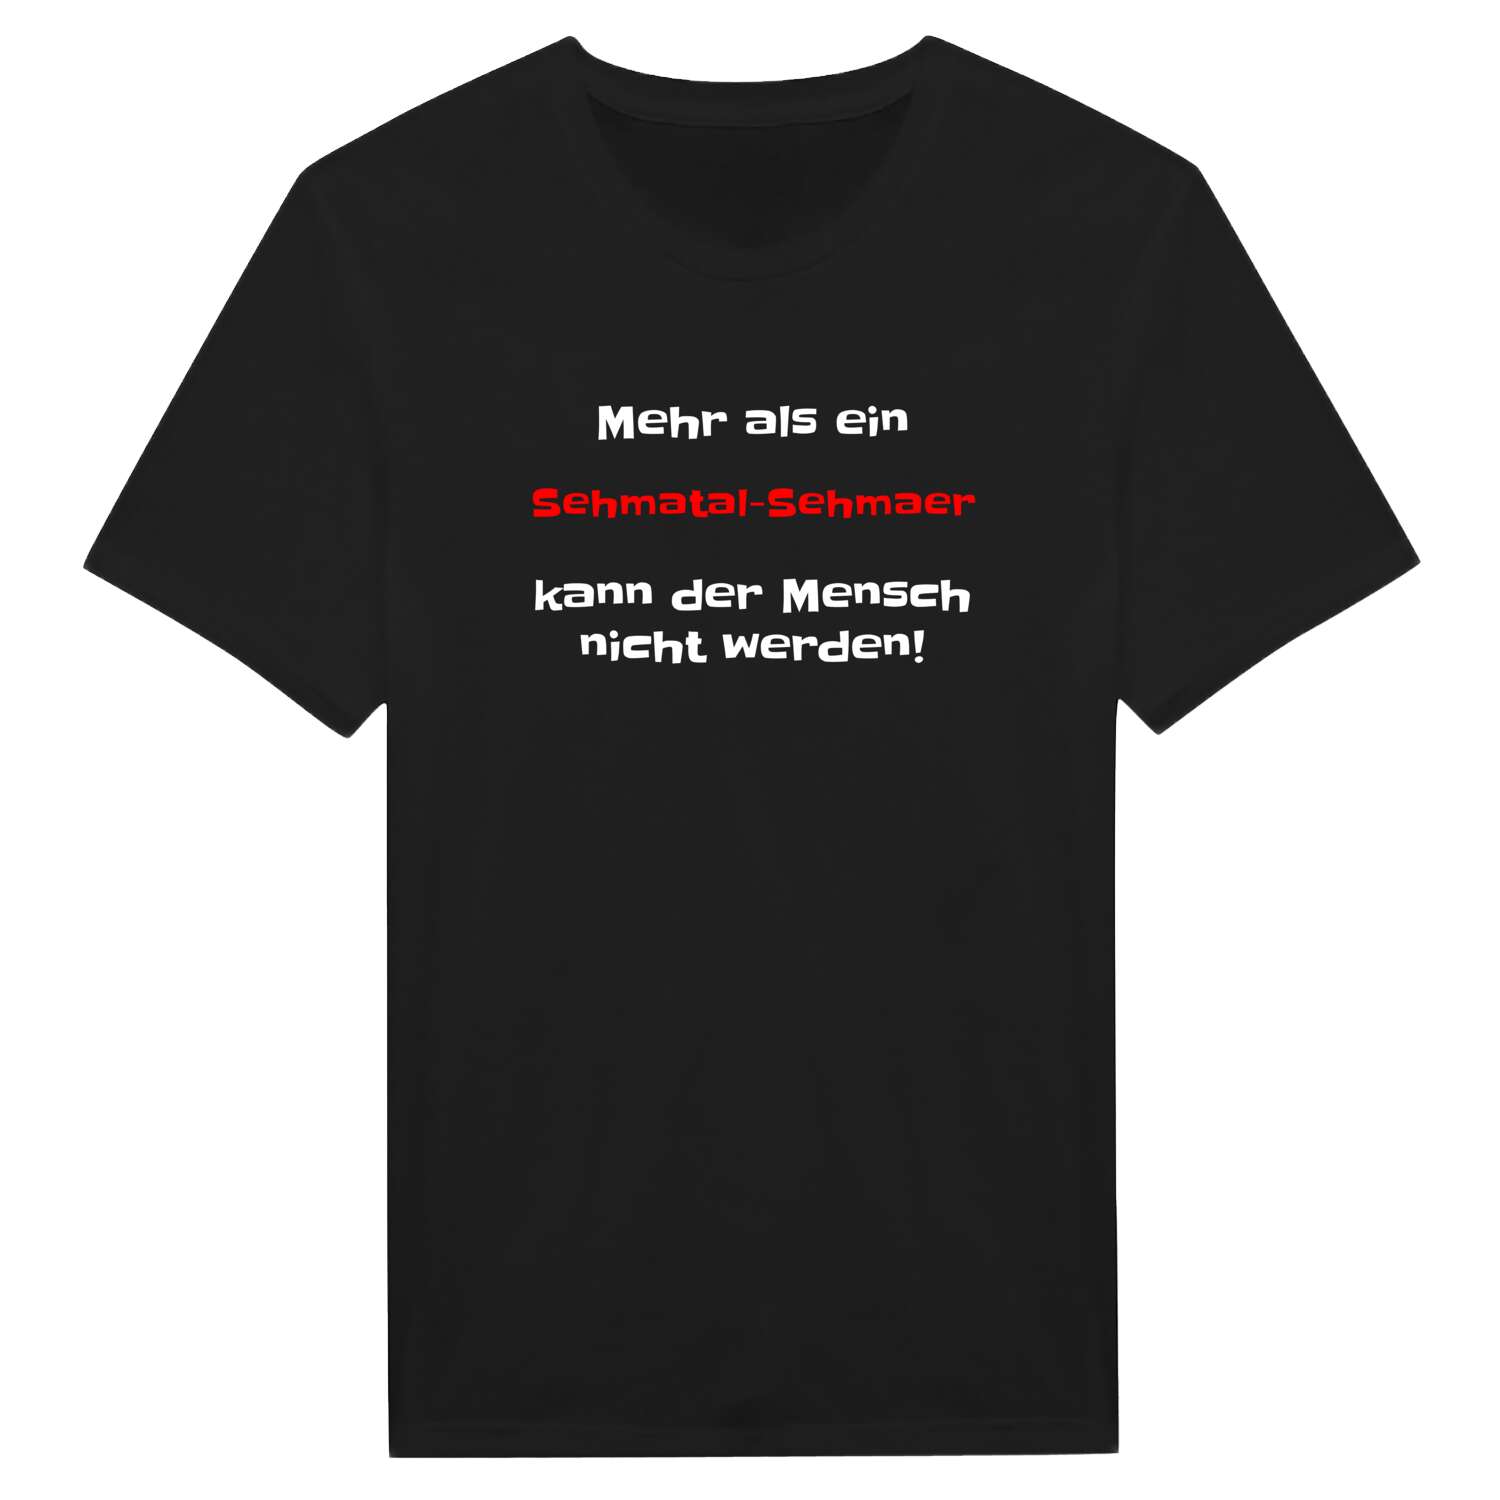 Sehmatal-Sehma T-Shirt »Mehr als ein«